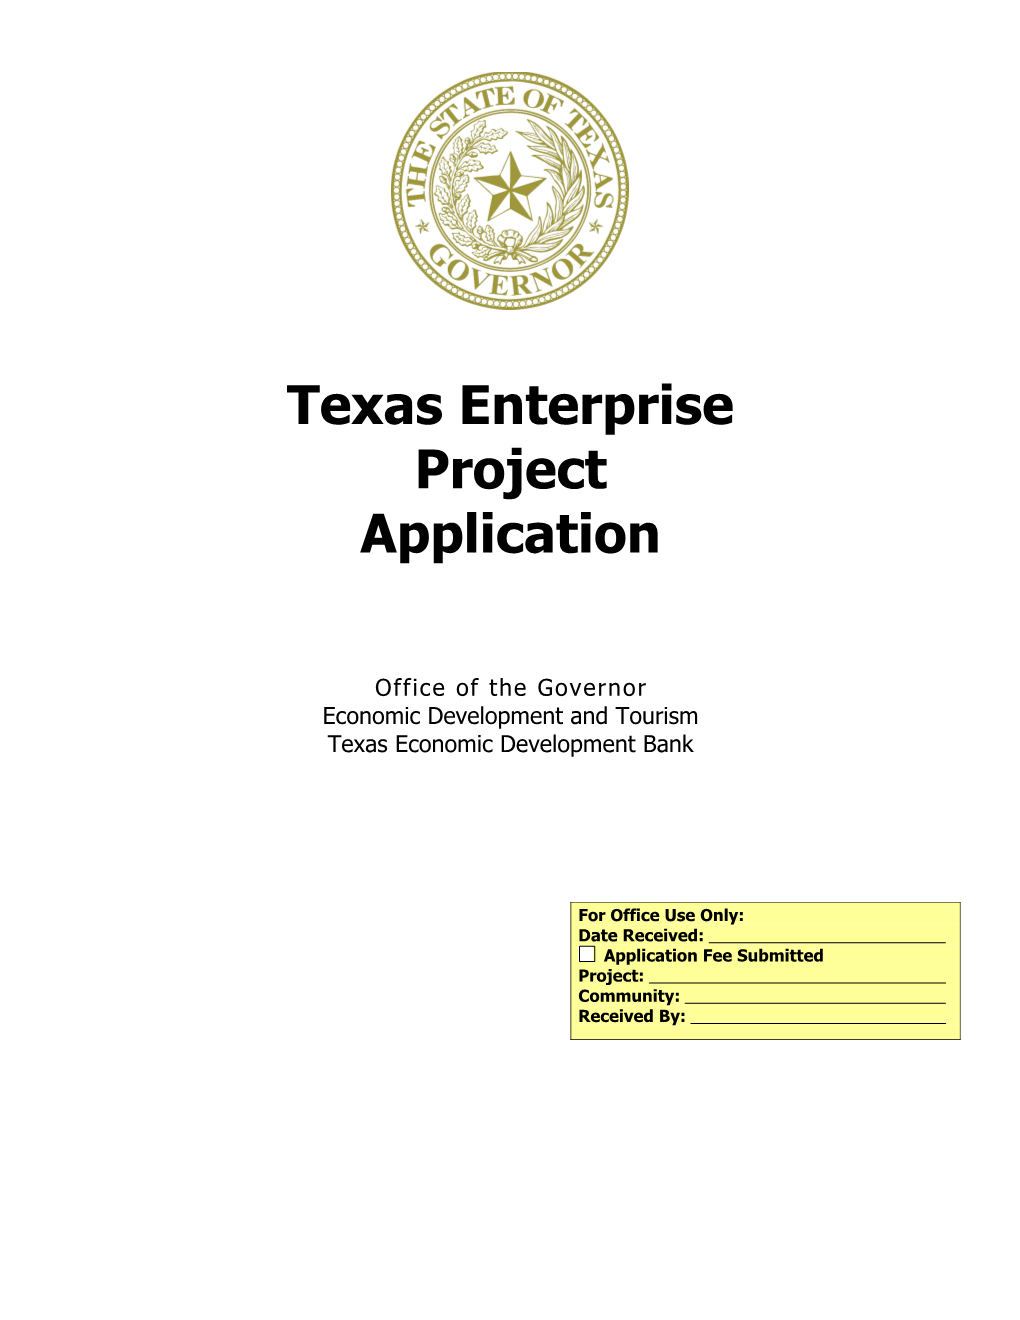 Texas Industrial Development Program Application